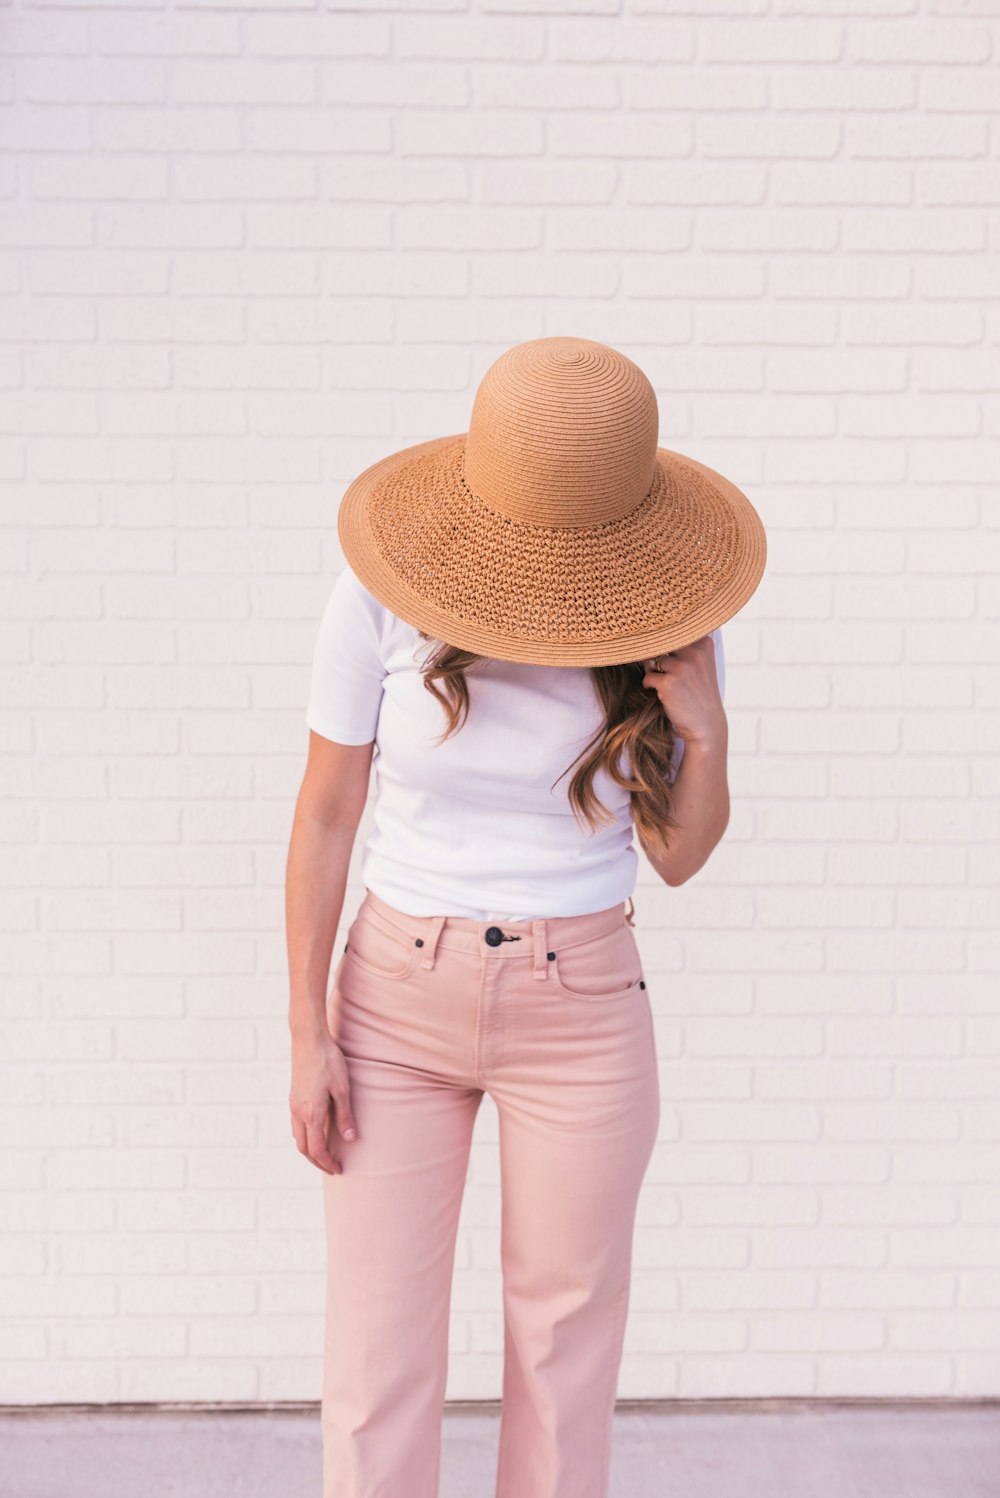 woman wearing white shirt, pink pants, and brown sun hat